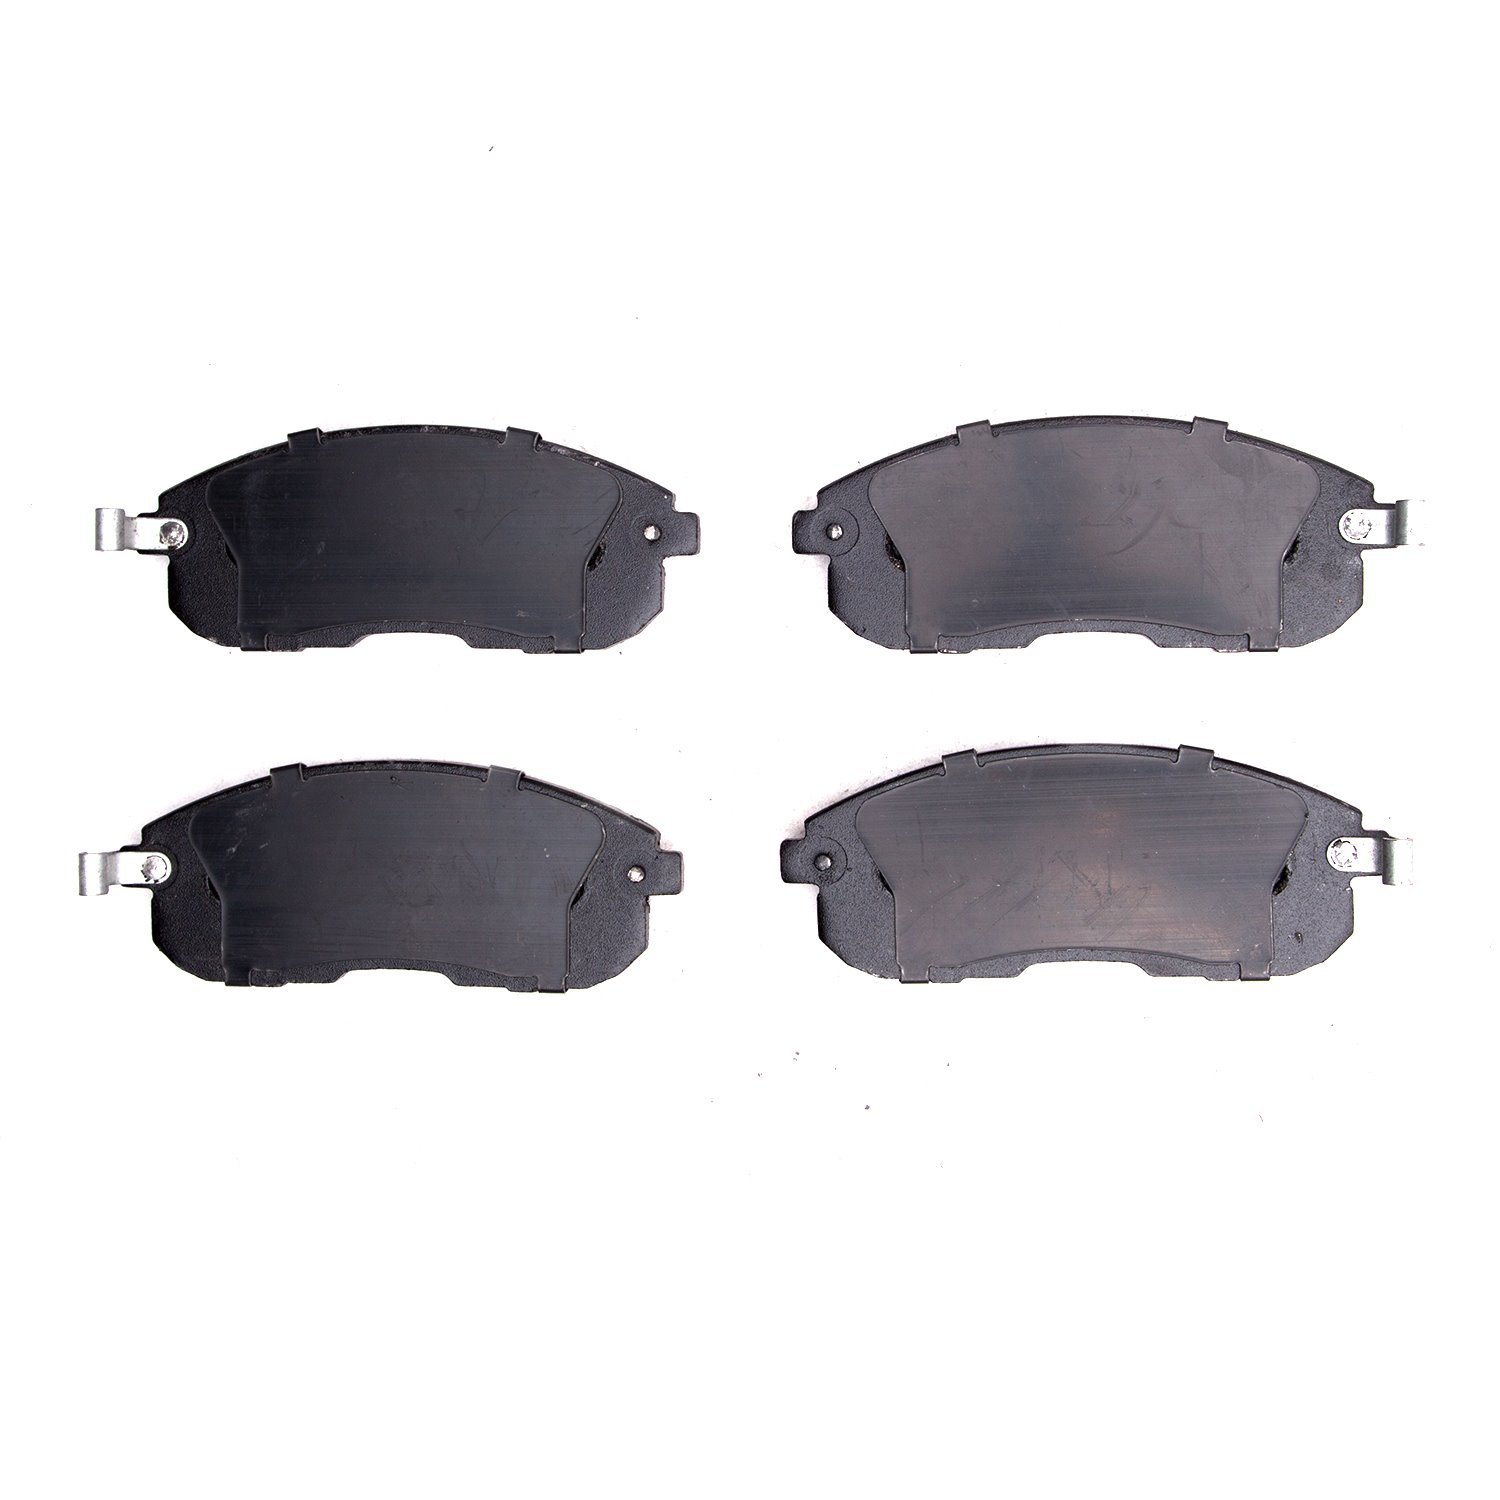 1310-0815-10 3000-Series Ceramic Brake Pads, 2002-2019 Multiple Makes/Models, Position: Front